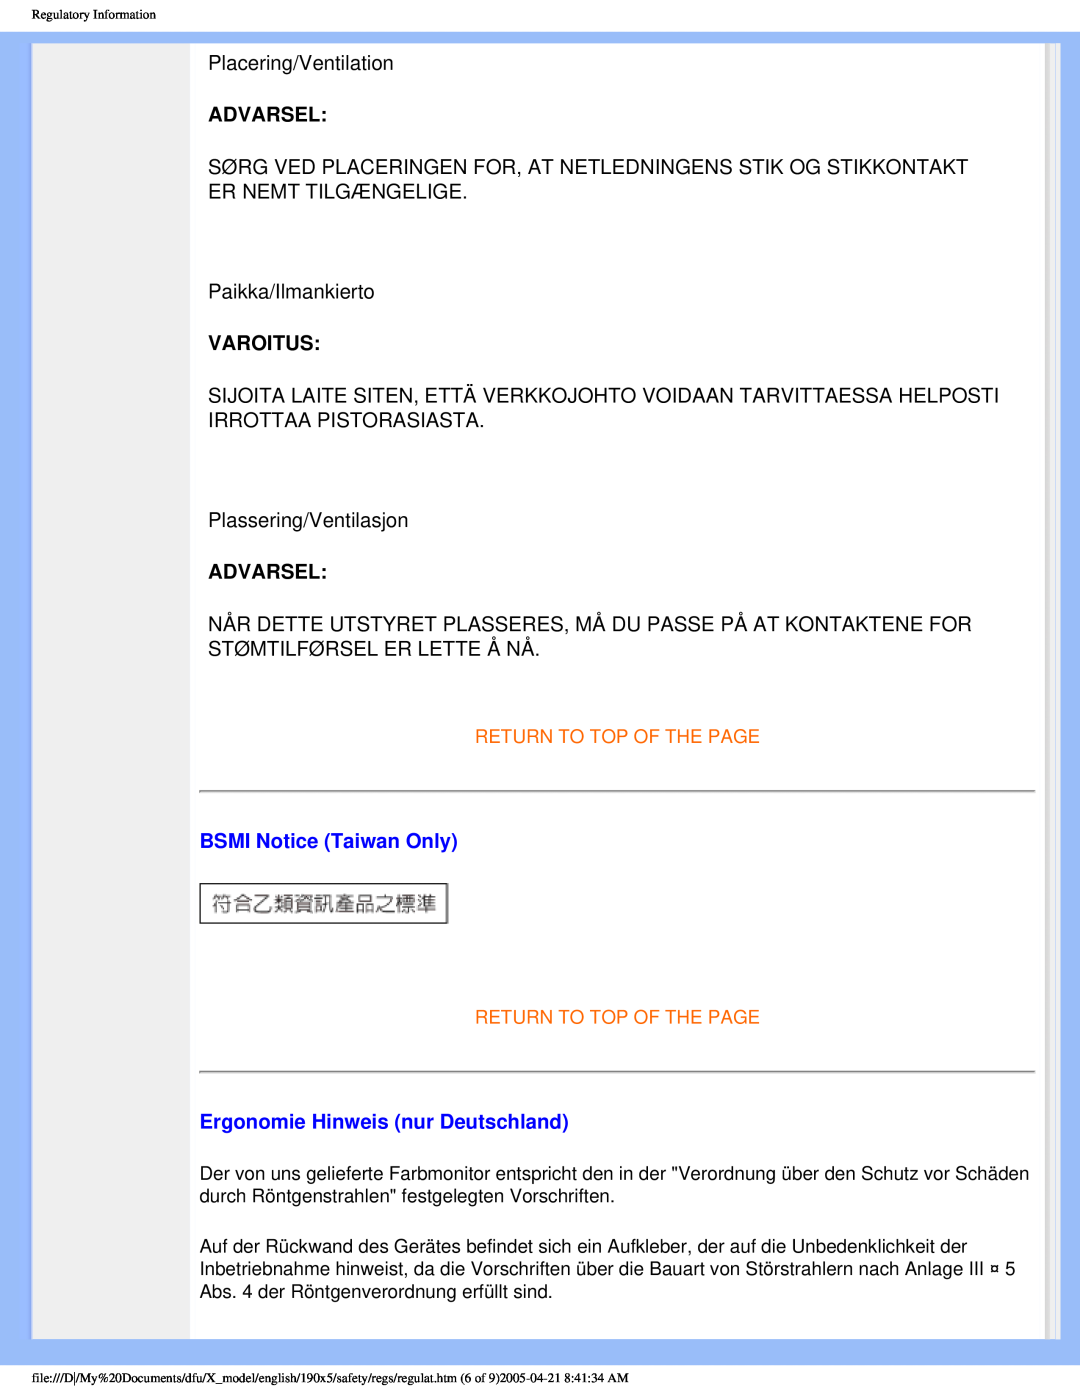 Philips 190X5 user manual Advarsel, Varoitus, BSMI Notice Taiwan Only, Ergonomie Hinweis nur Deutschland 